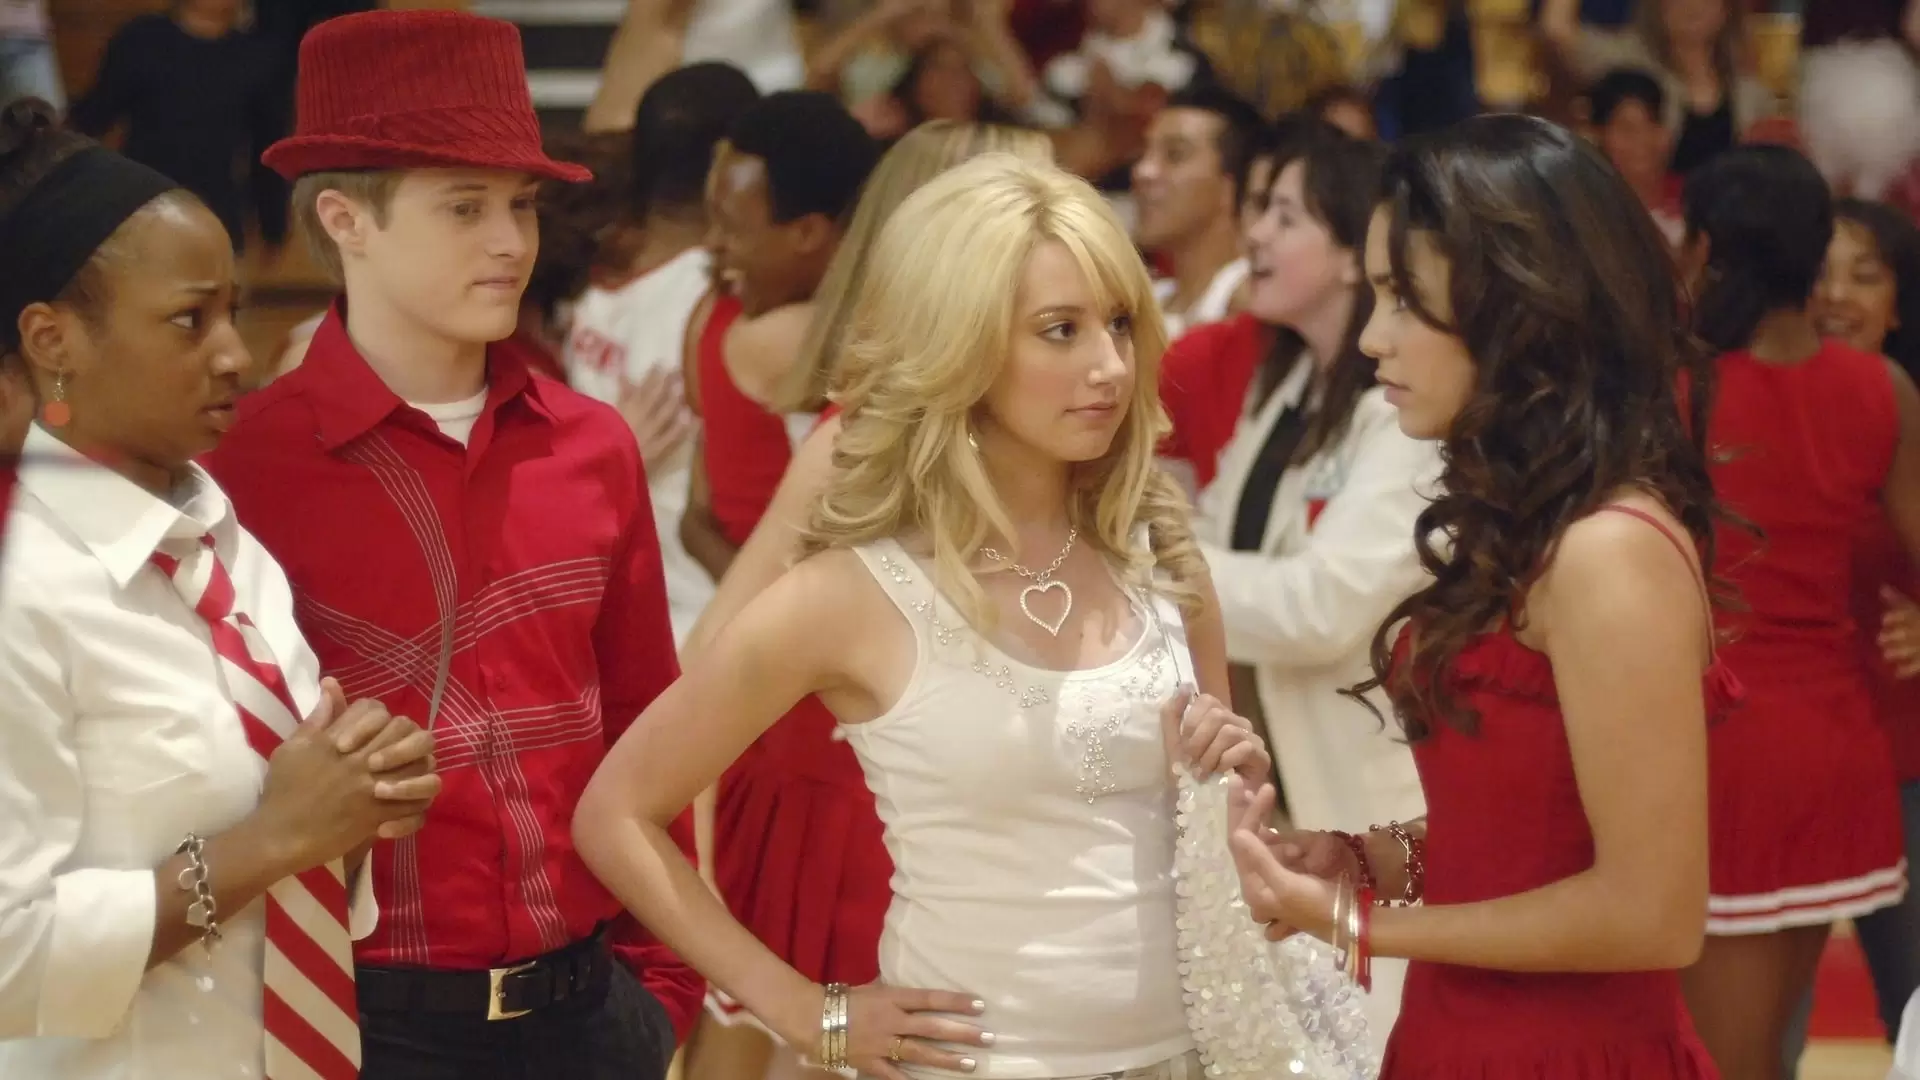 دانلود فیلم High School Musical 2006 (موزیکال دبیرستان) با زیرنویس فارسی